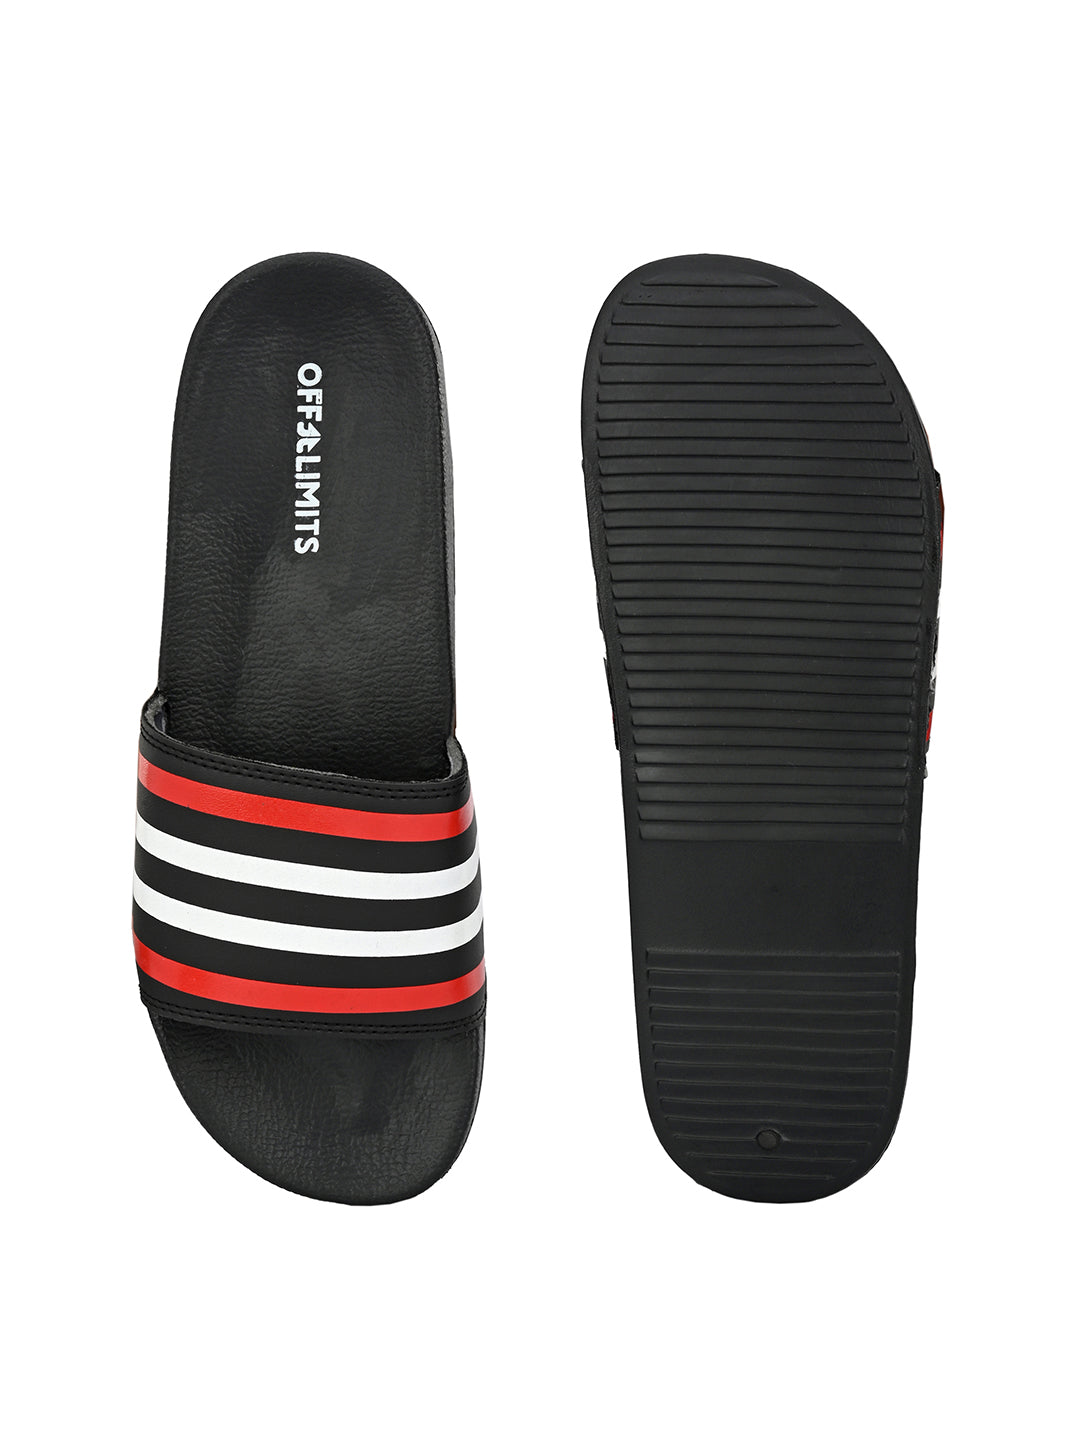 OCATA Men Sandals & Sliders